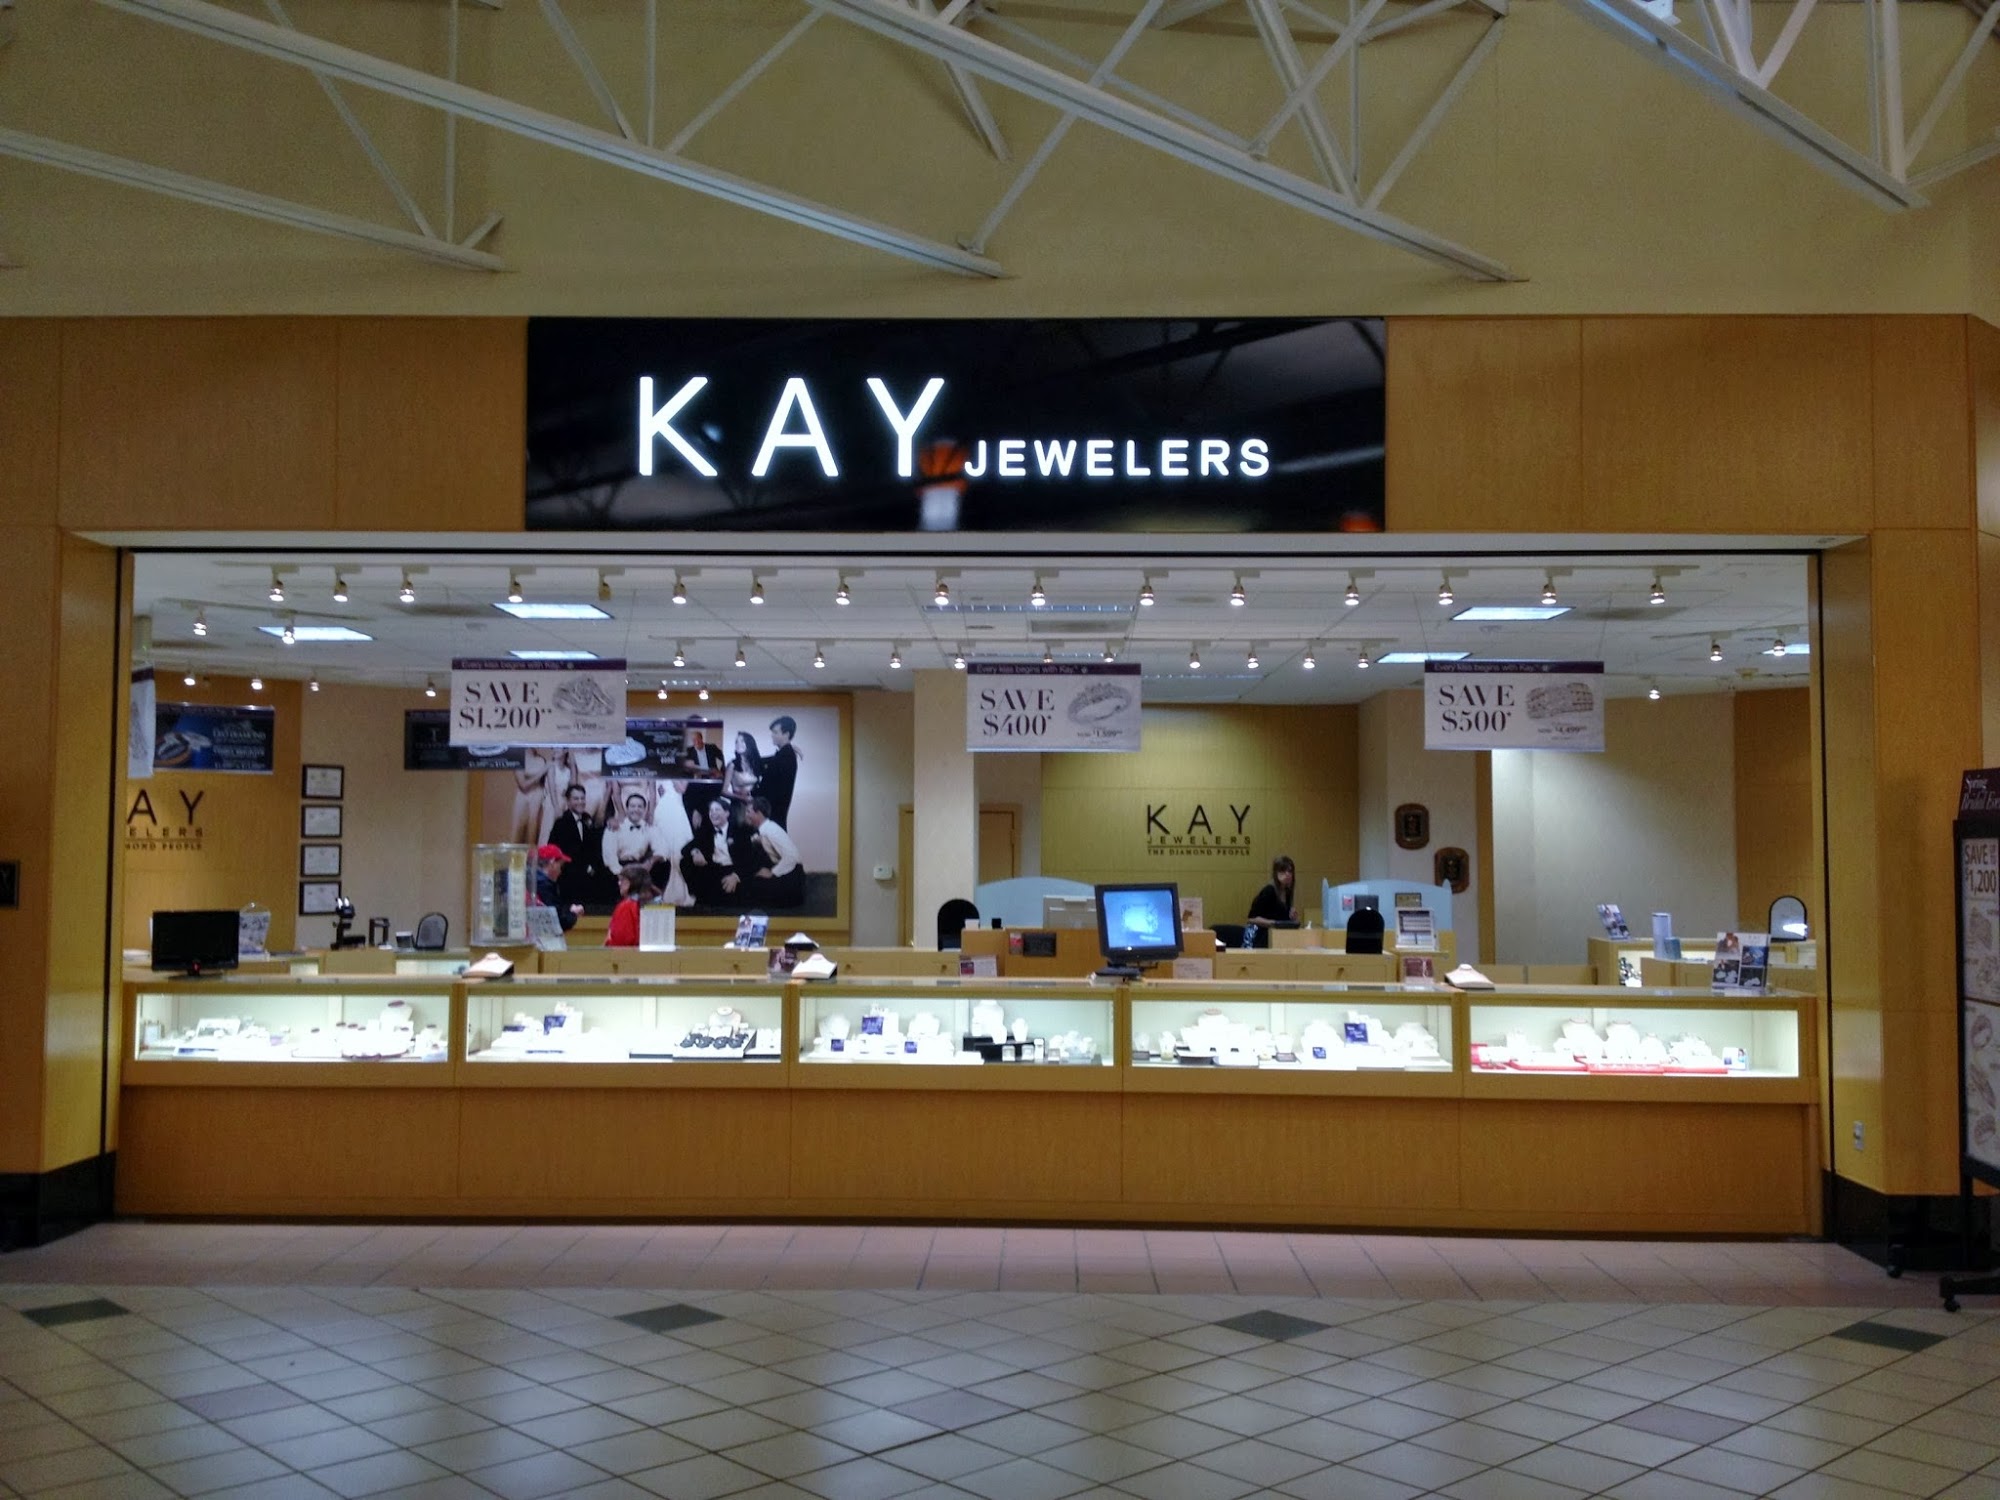 KAY Jewelers